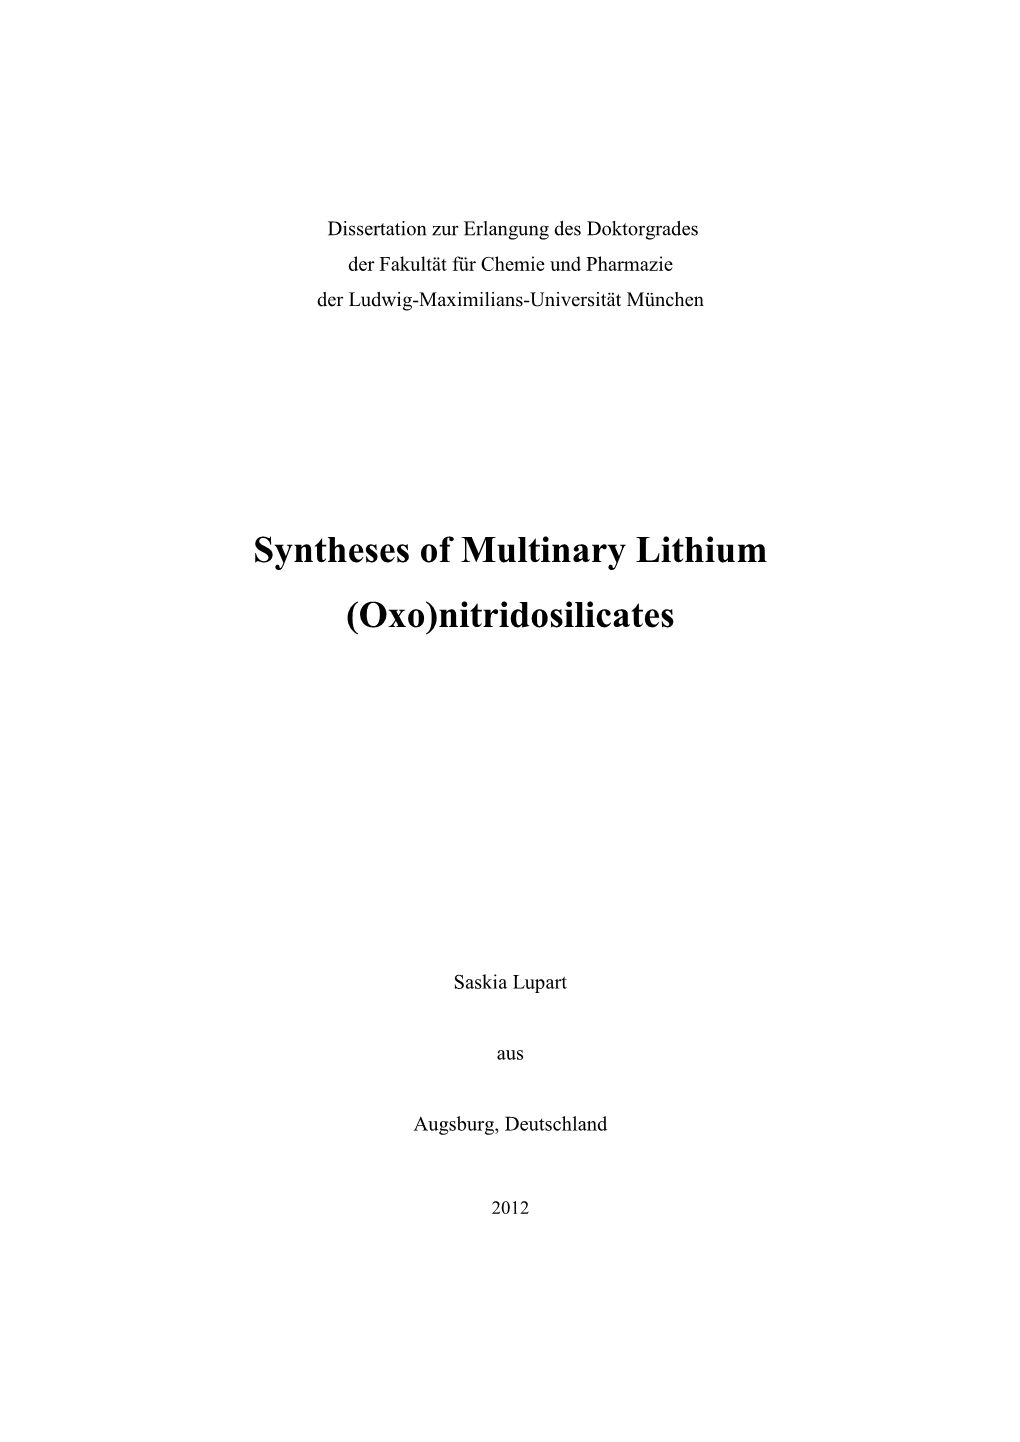 Syntheses of Multinary Lithium (Oxo)Nitridosilicates